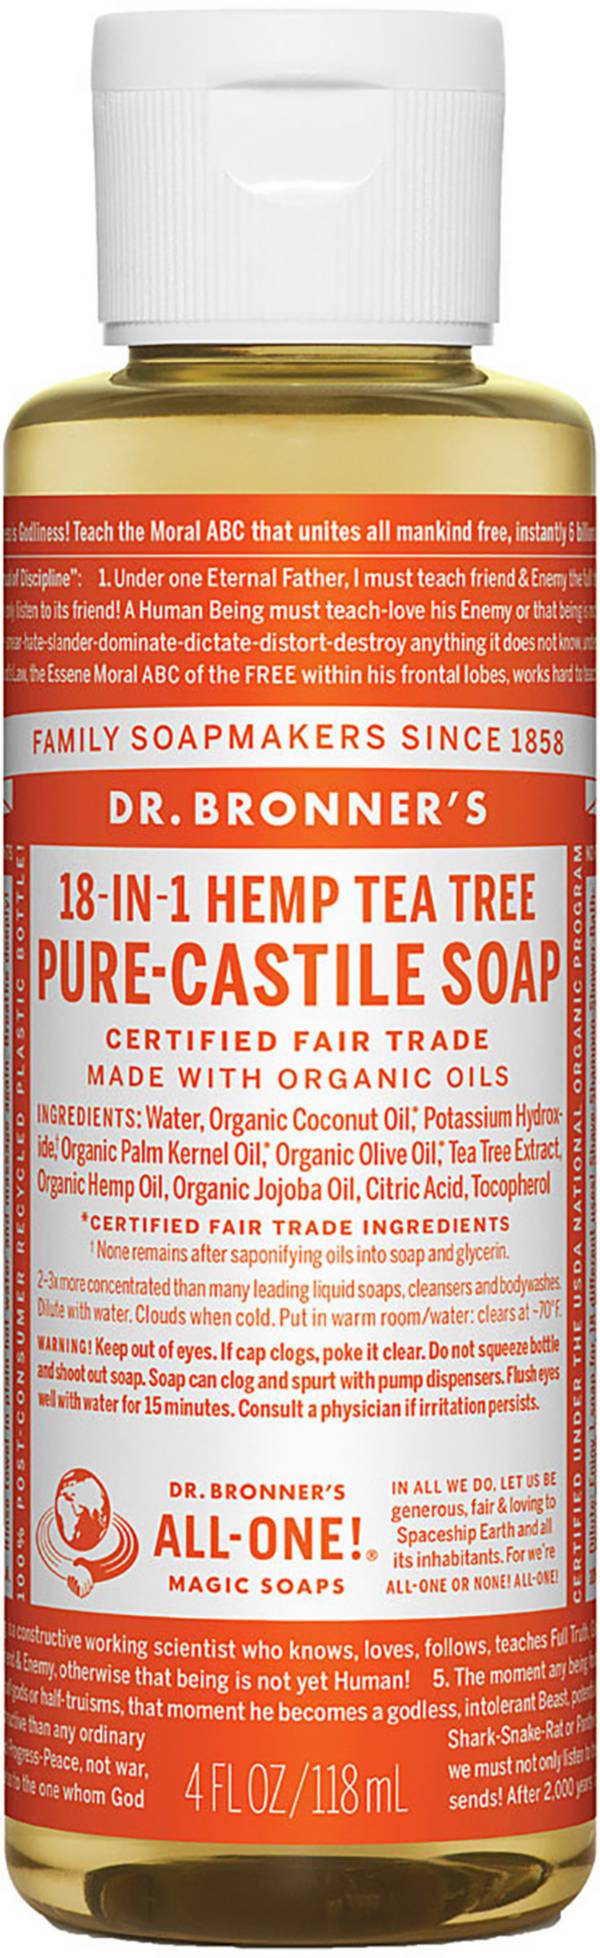 Dr. Bronner's Tea Tree 4 oz Pure-Castile Soap product image